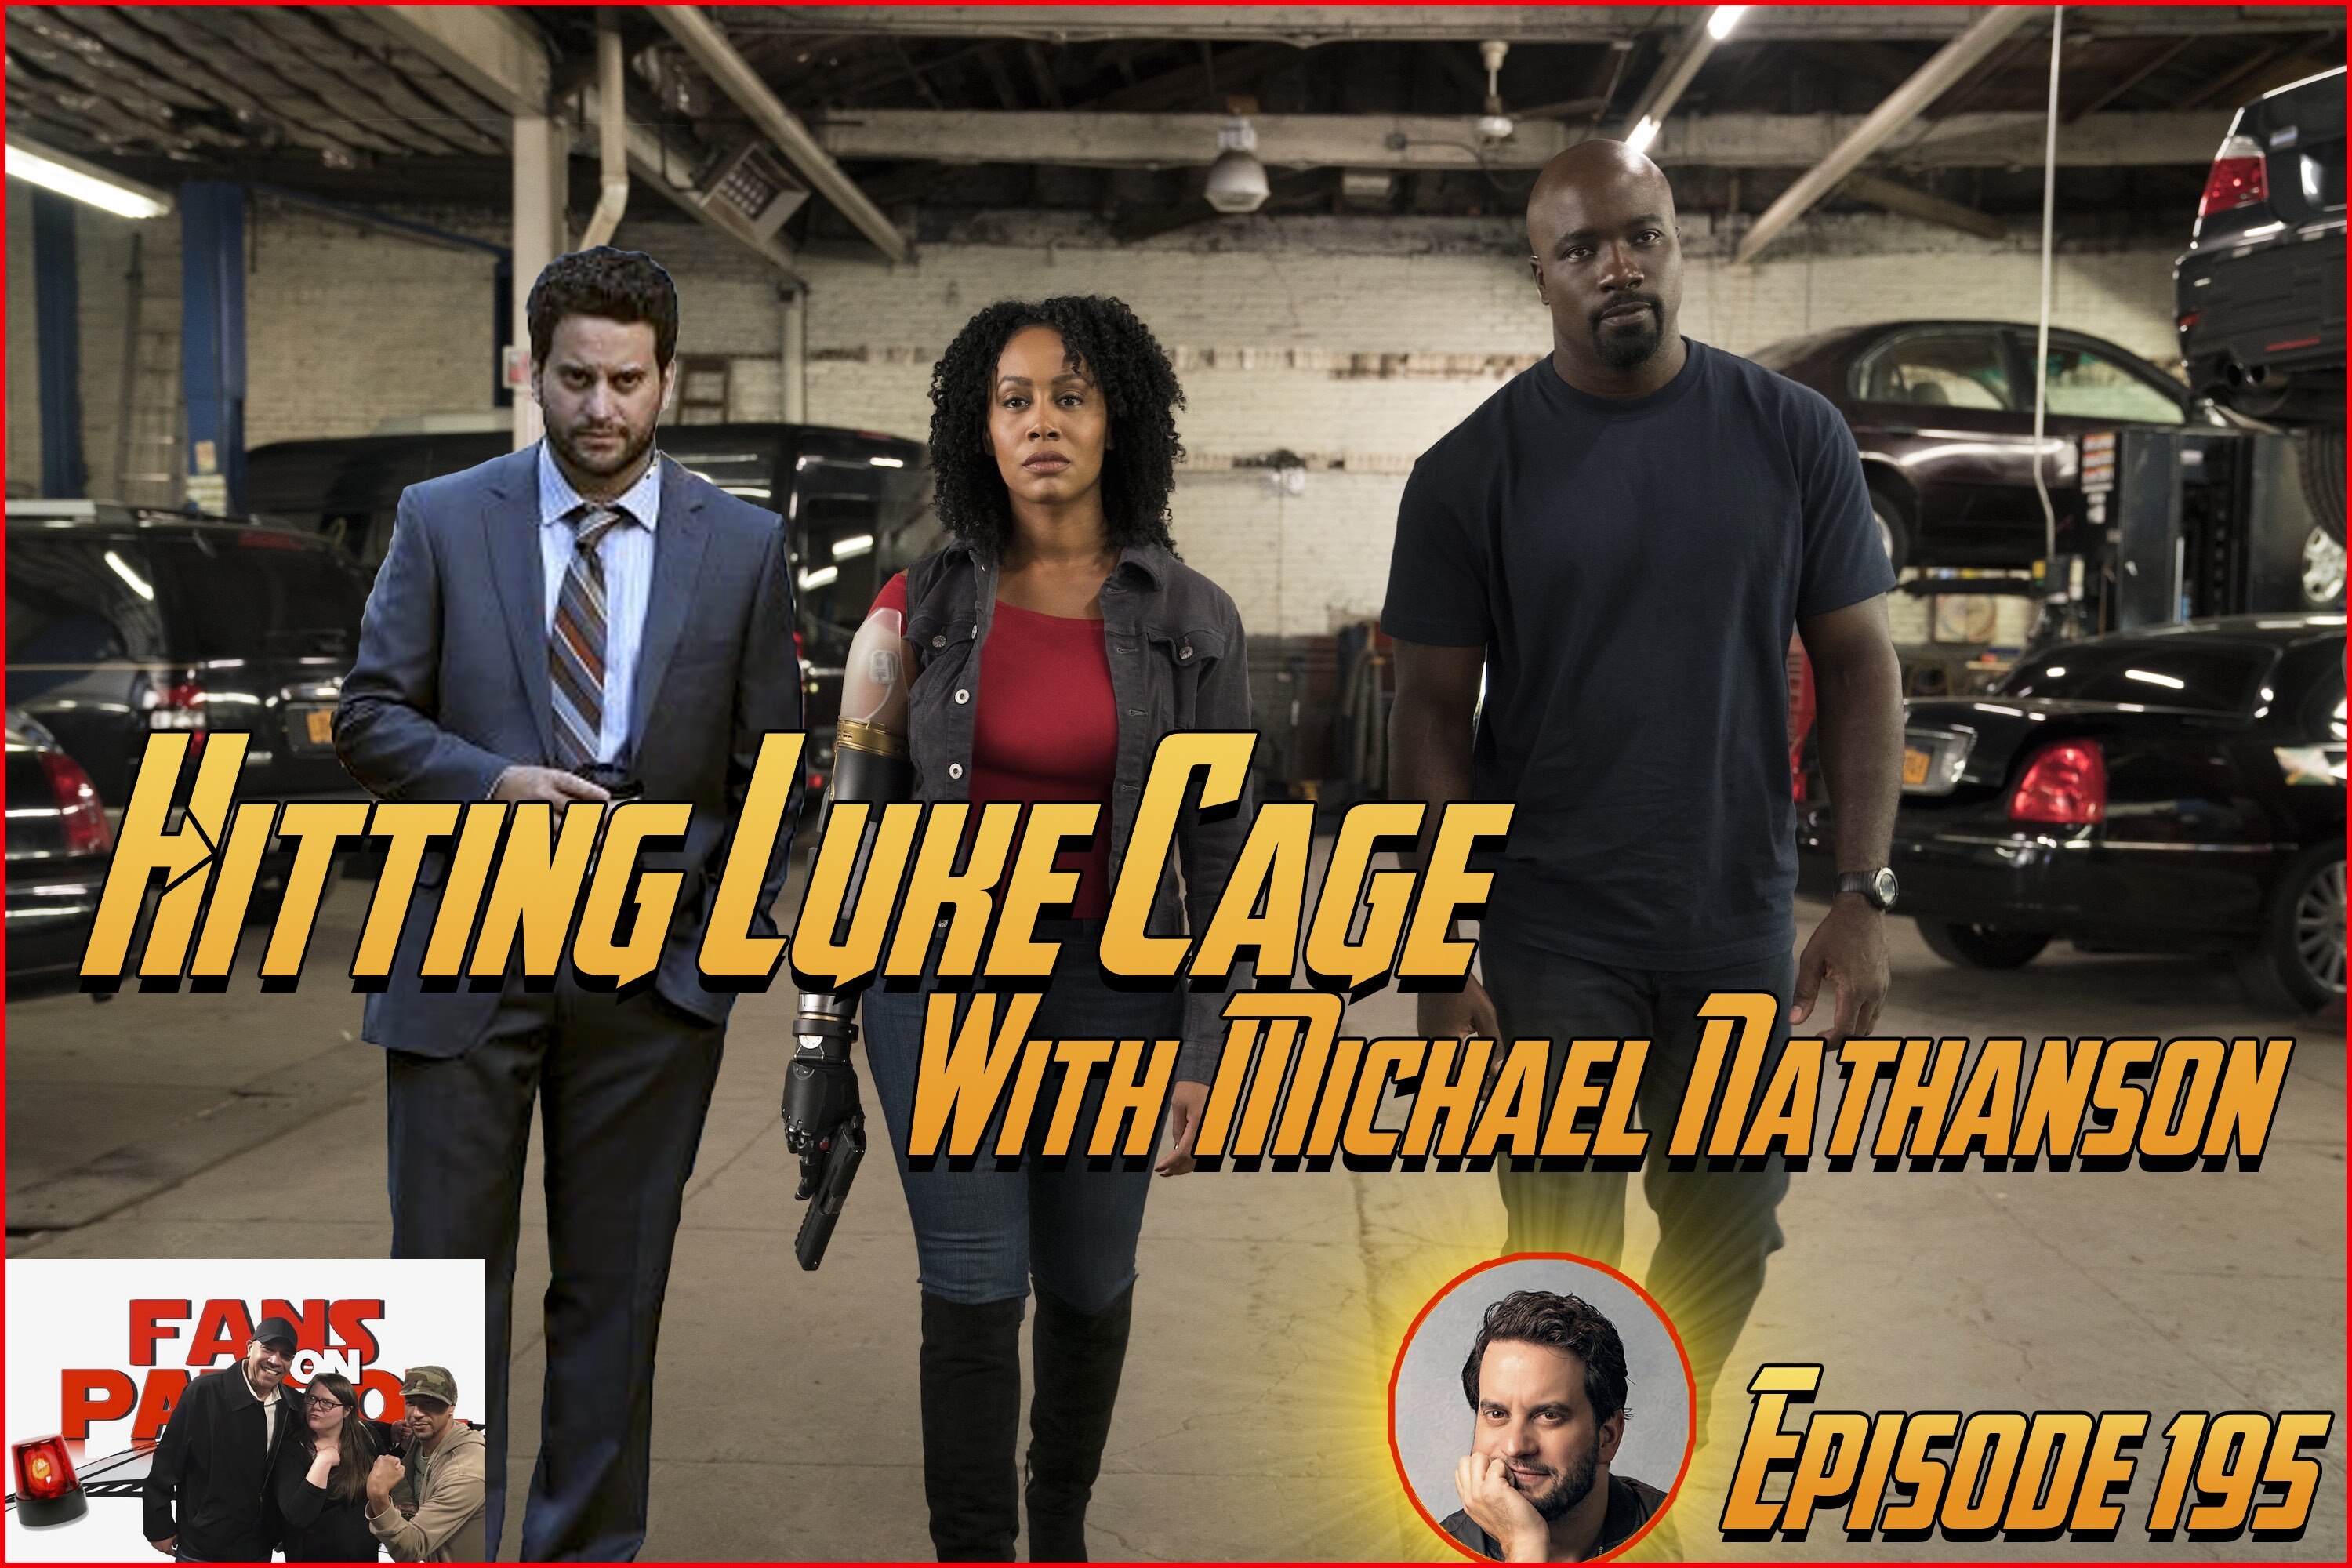 HITTING LUKE CAGE WITH MICHAEL NATHANSON Episode 195